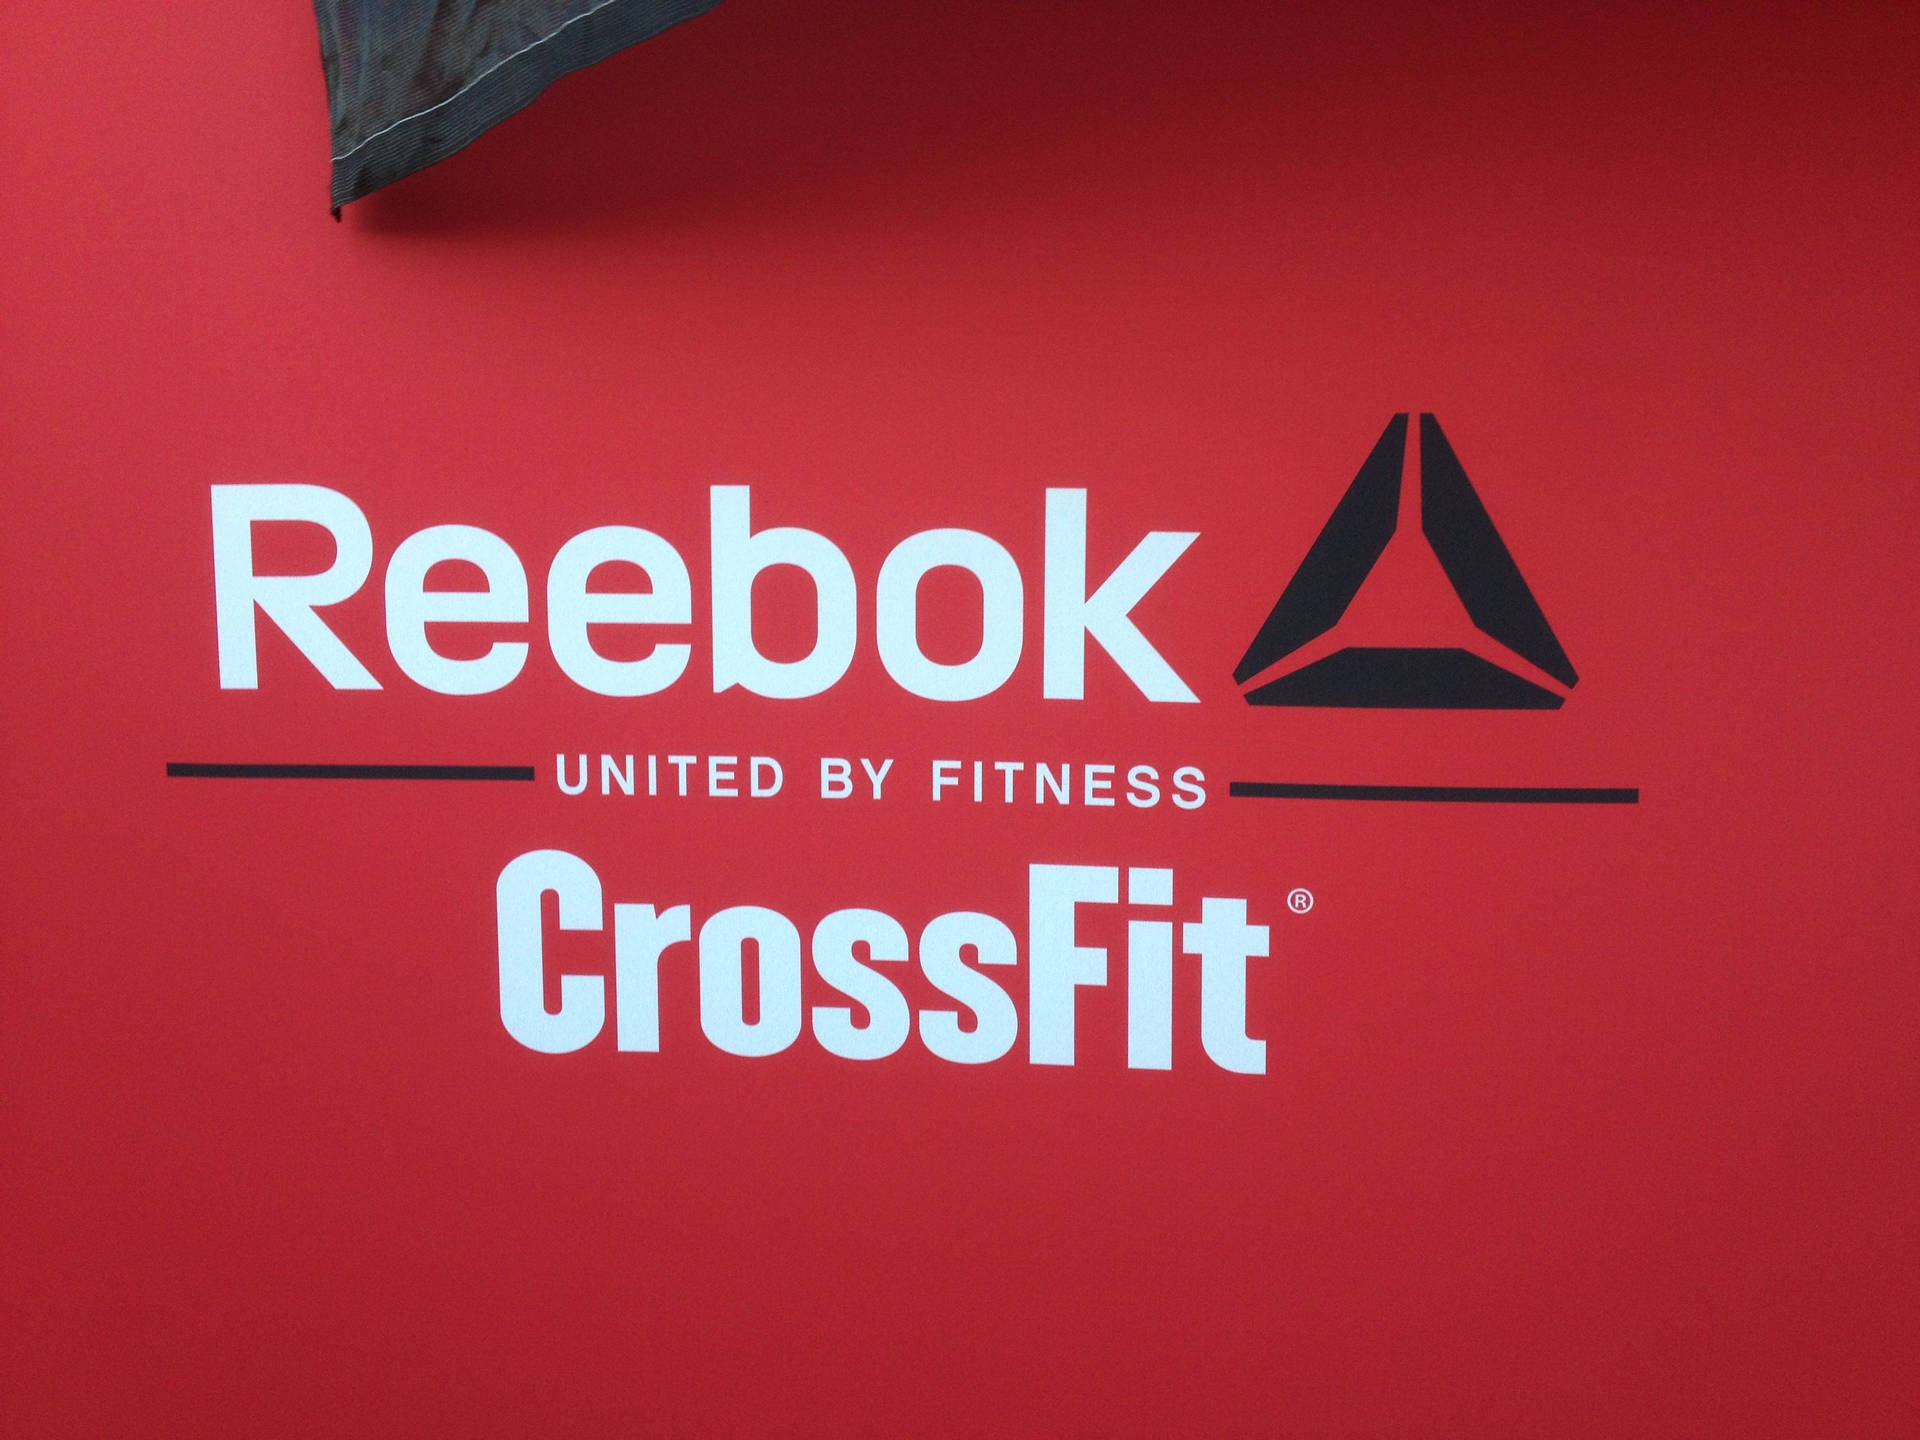 Reebok Crossfit United By Fitness